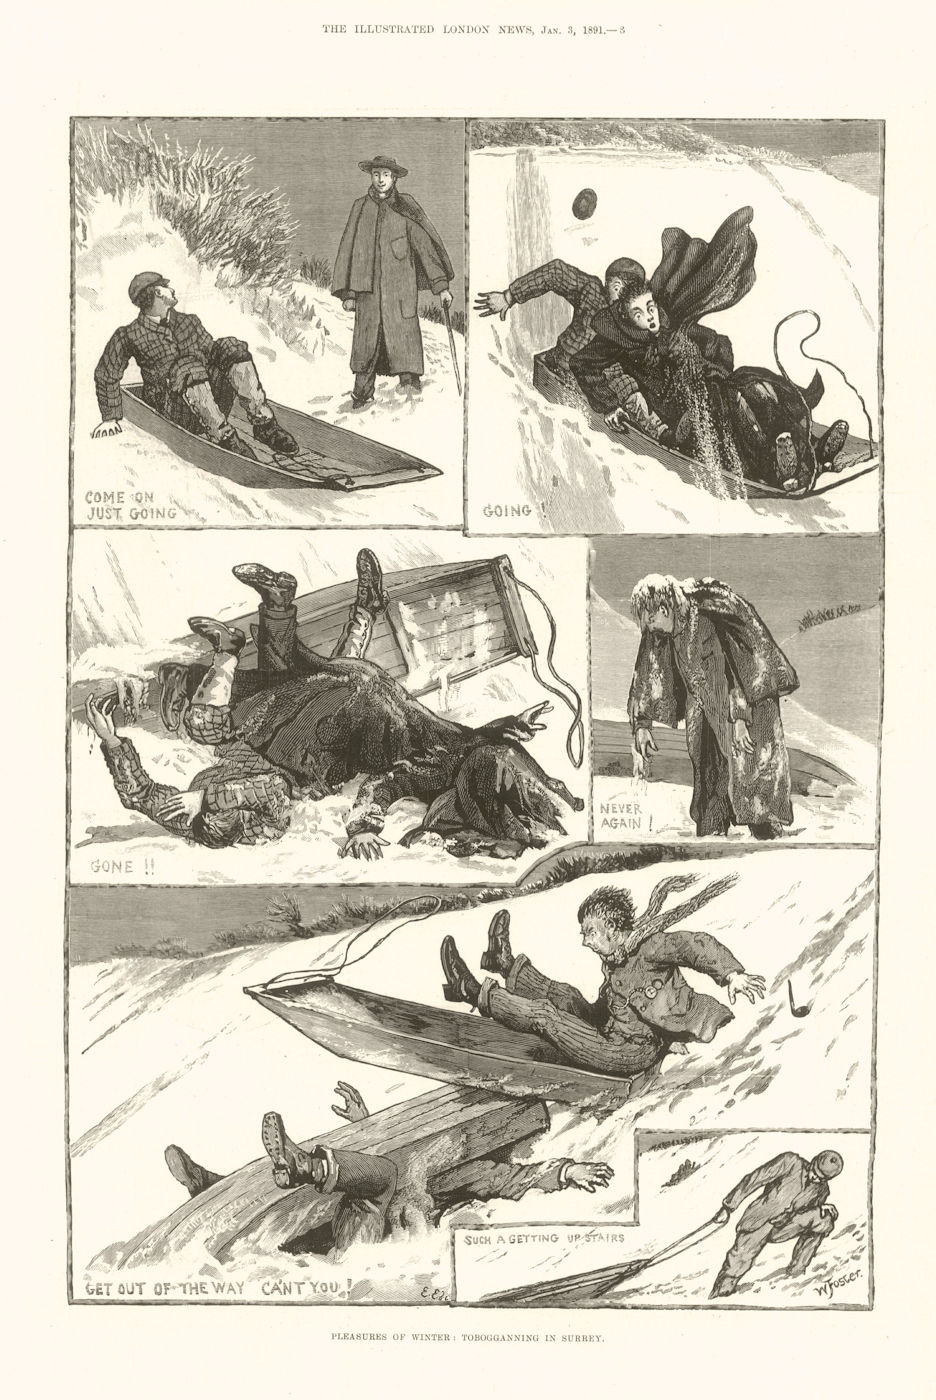 Associate Product Pleasures of Winter: Tobogganning in Surrey 1891 antique ILN full page print